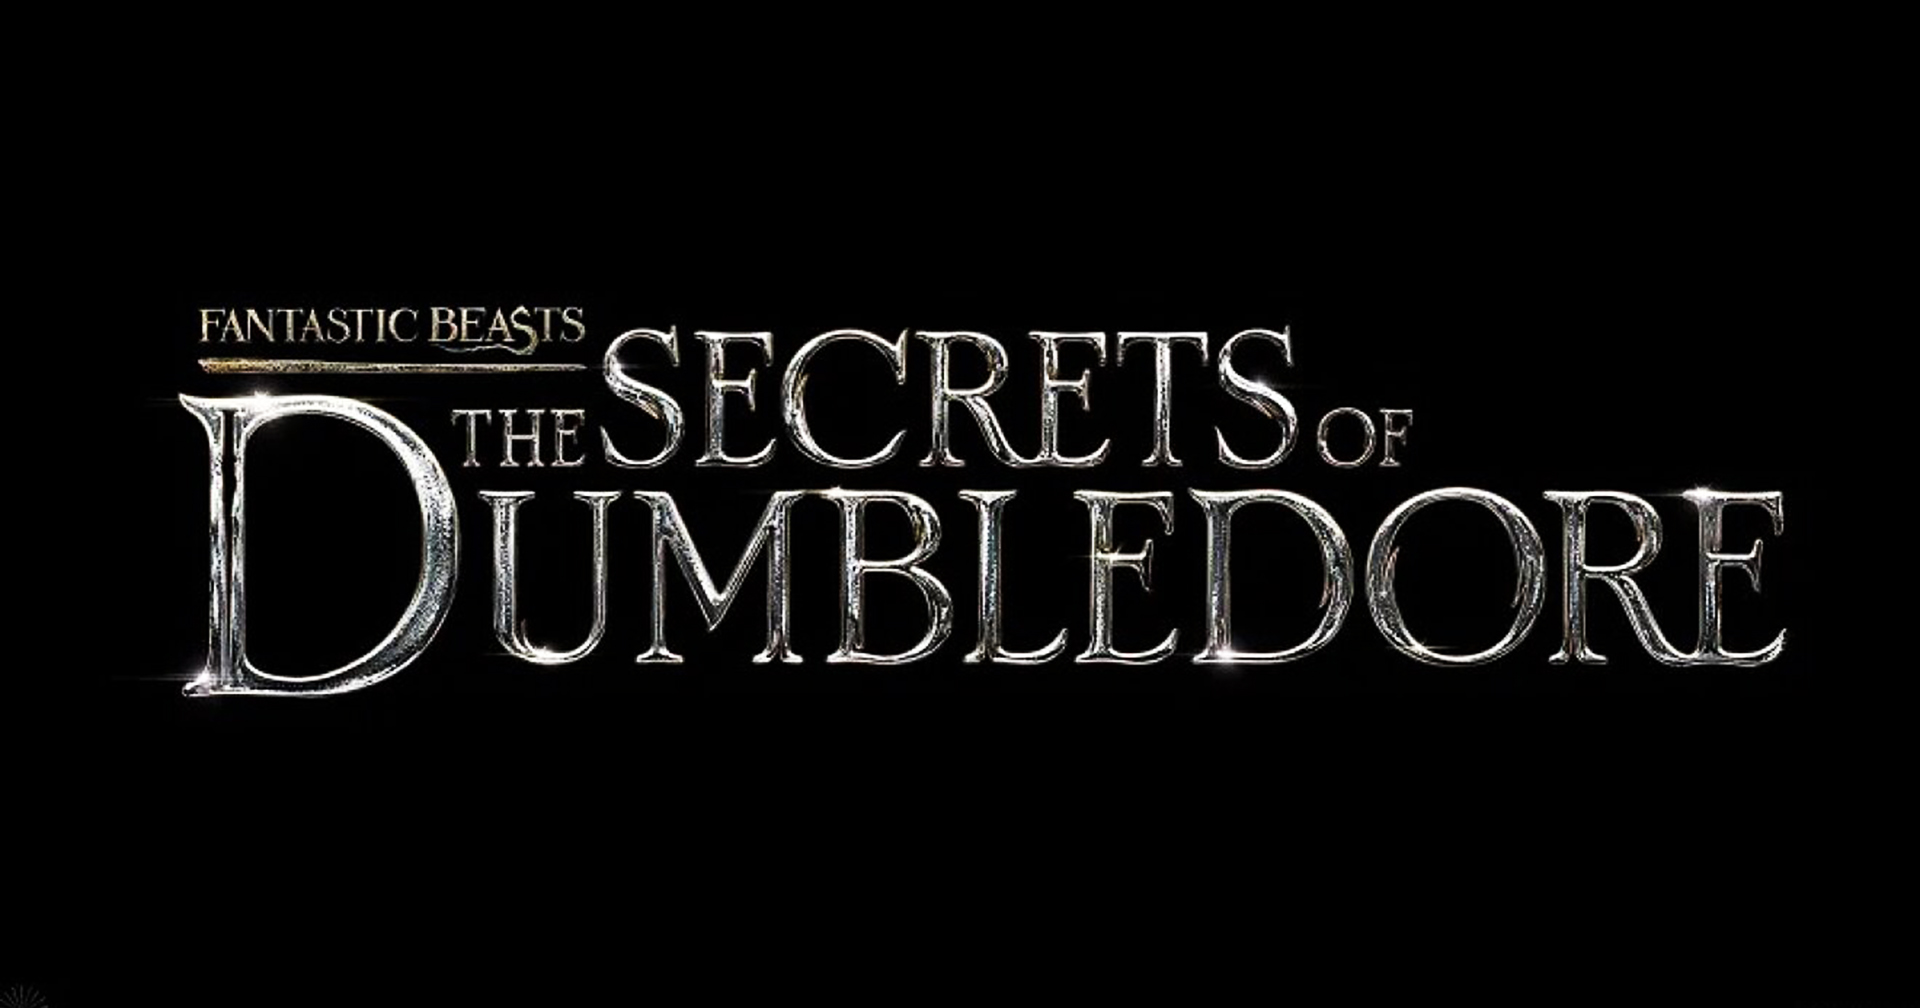 ‘Fantastic Beasts 3’ มีชื่ออย่างเป็นทางการว่า ‘Secrets of Dumbledore’